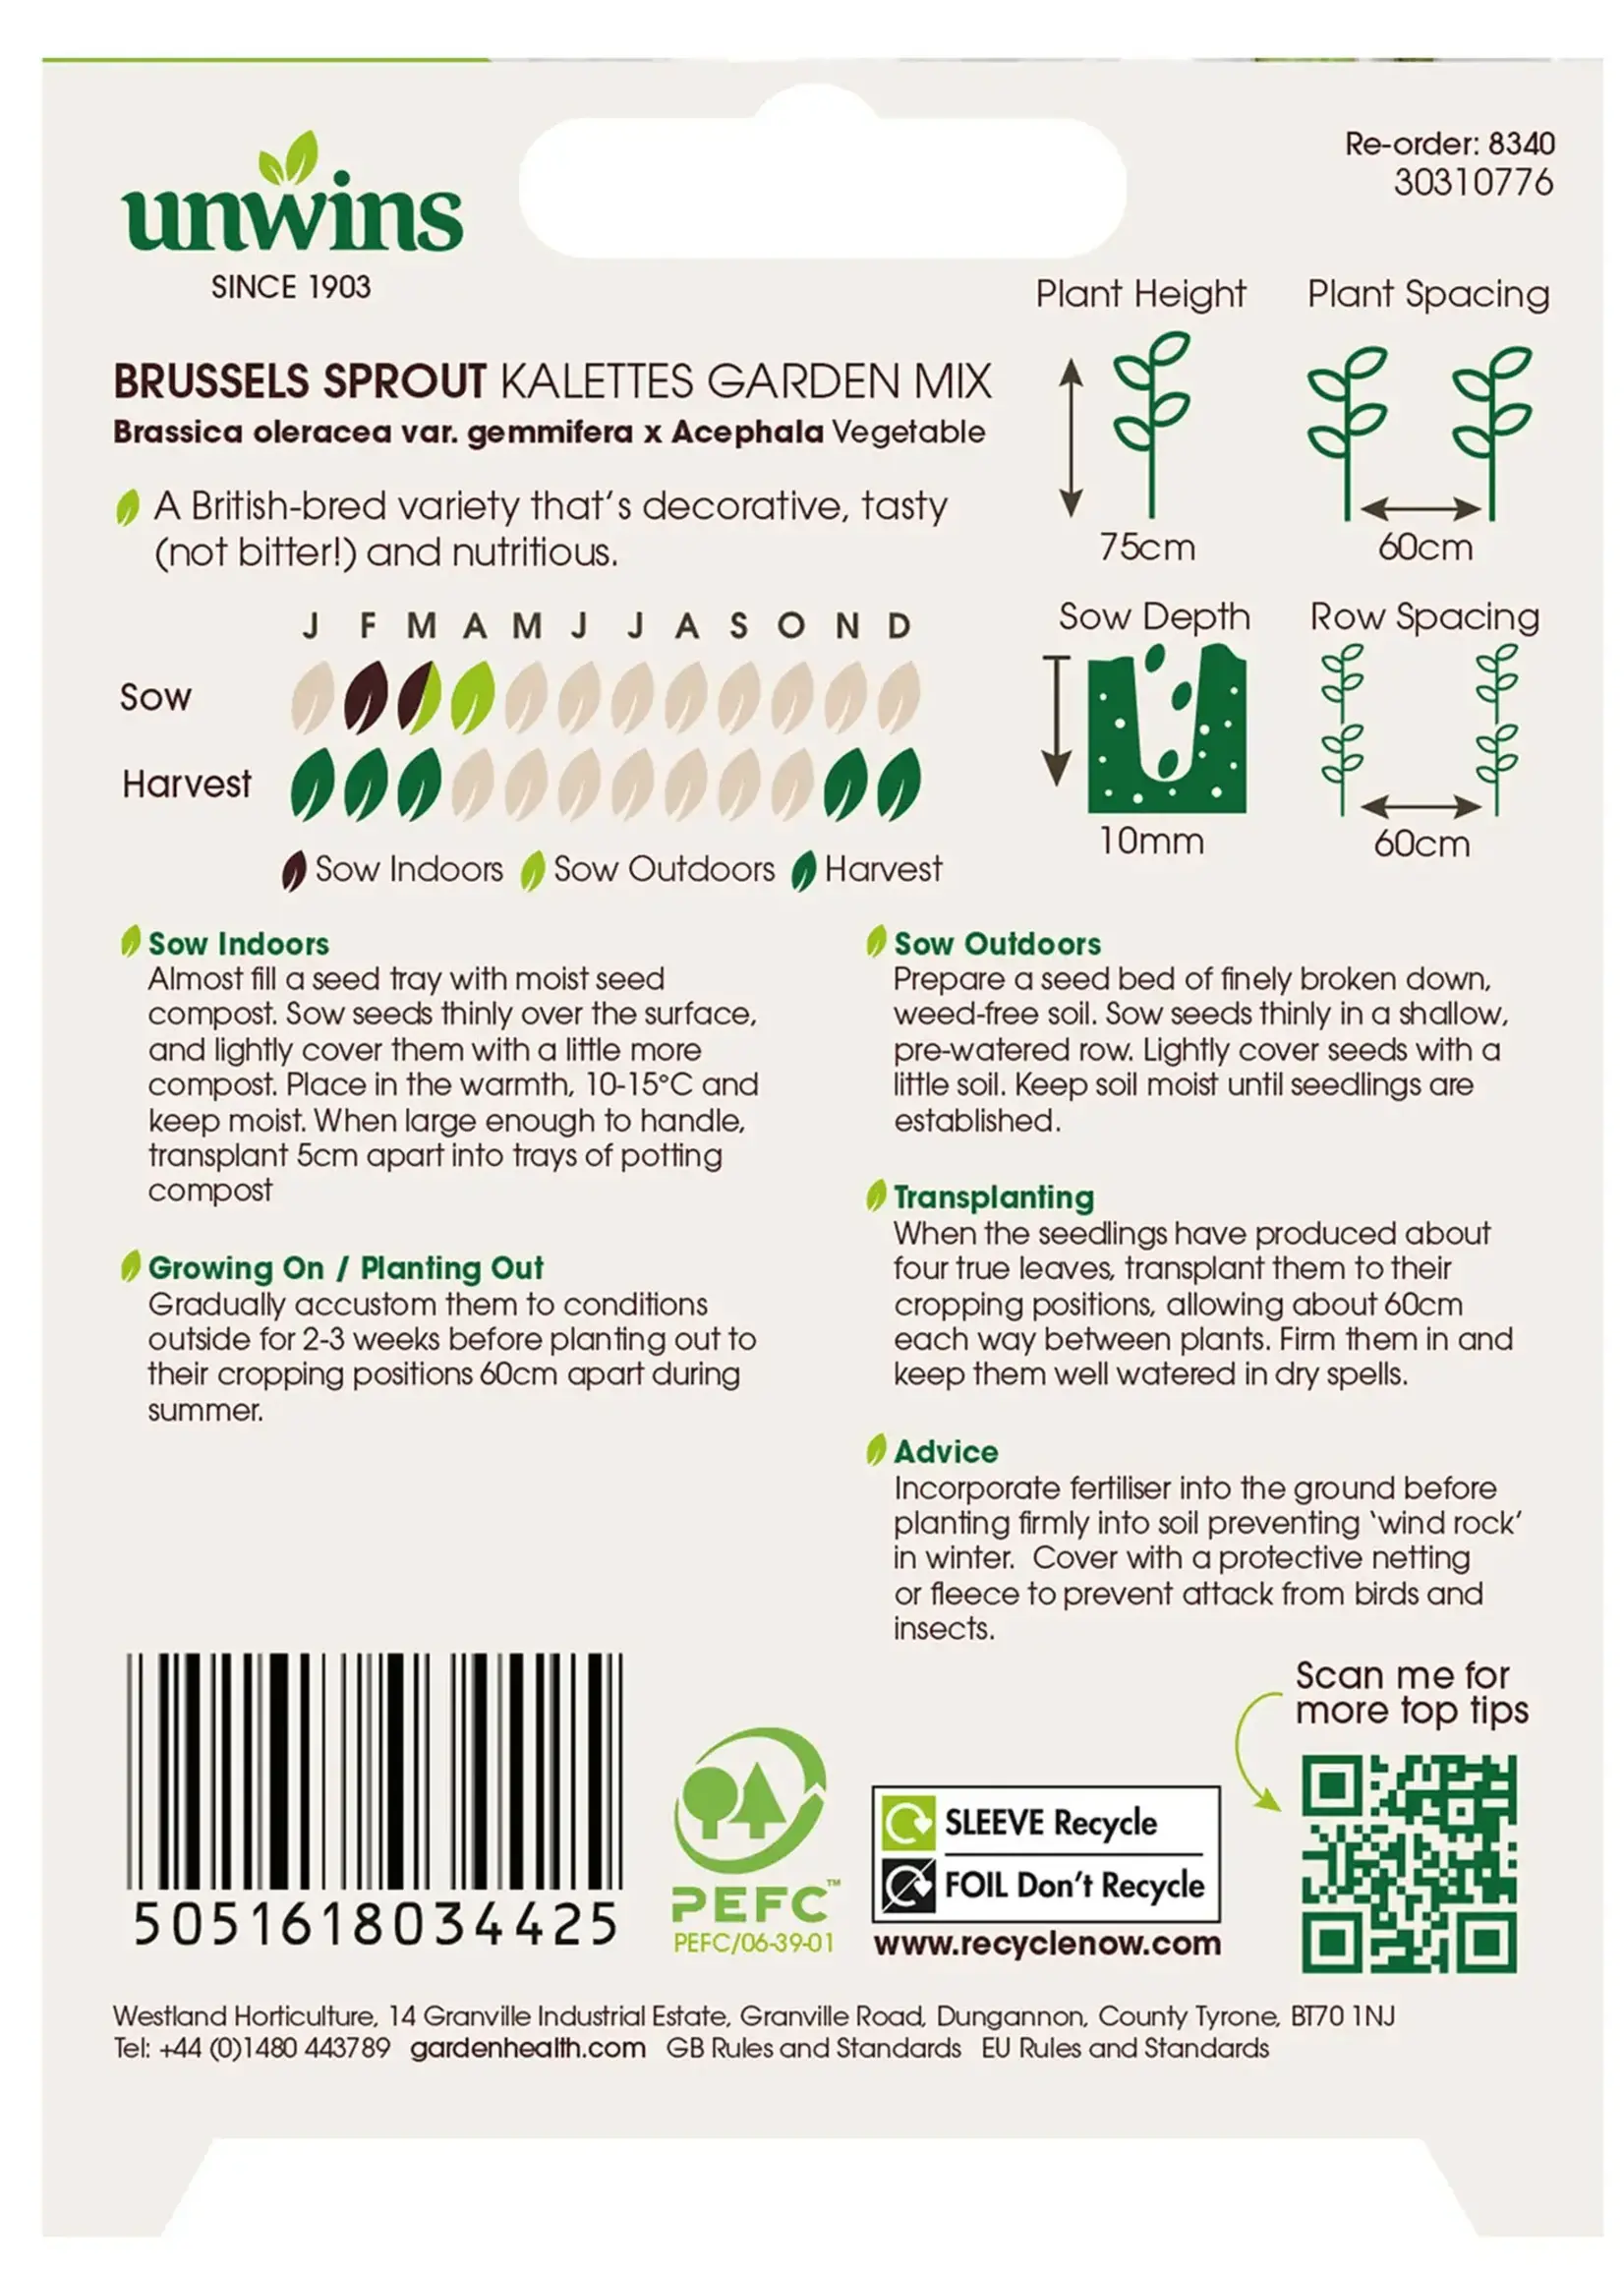 Unwins Brussels Sprout - Kalettes Garden Mix